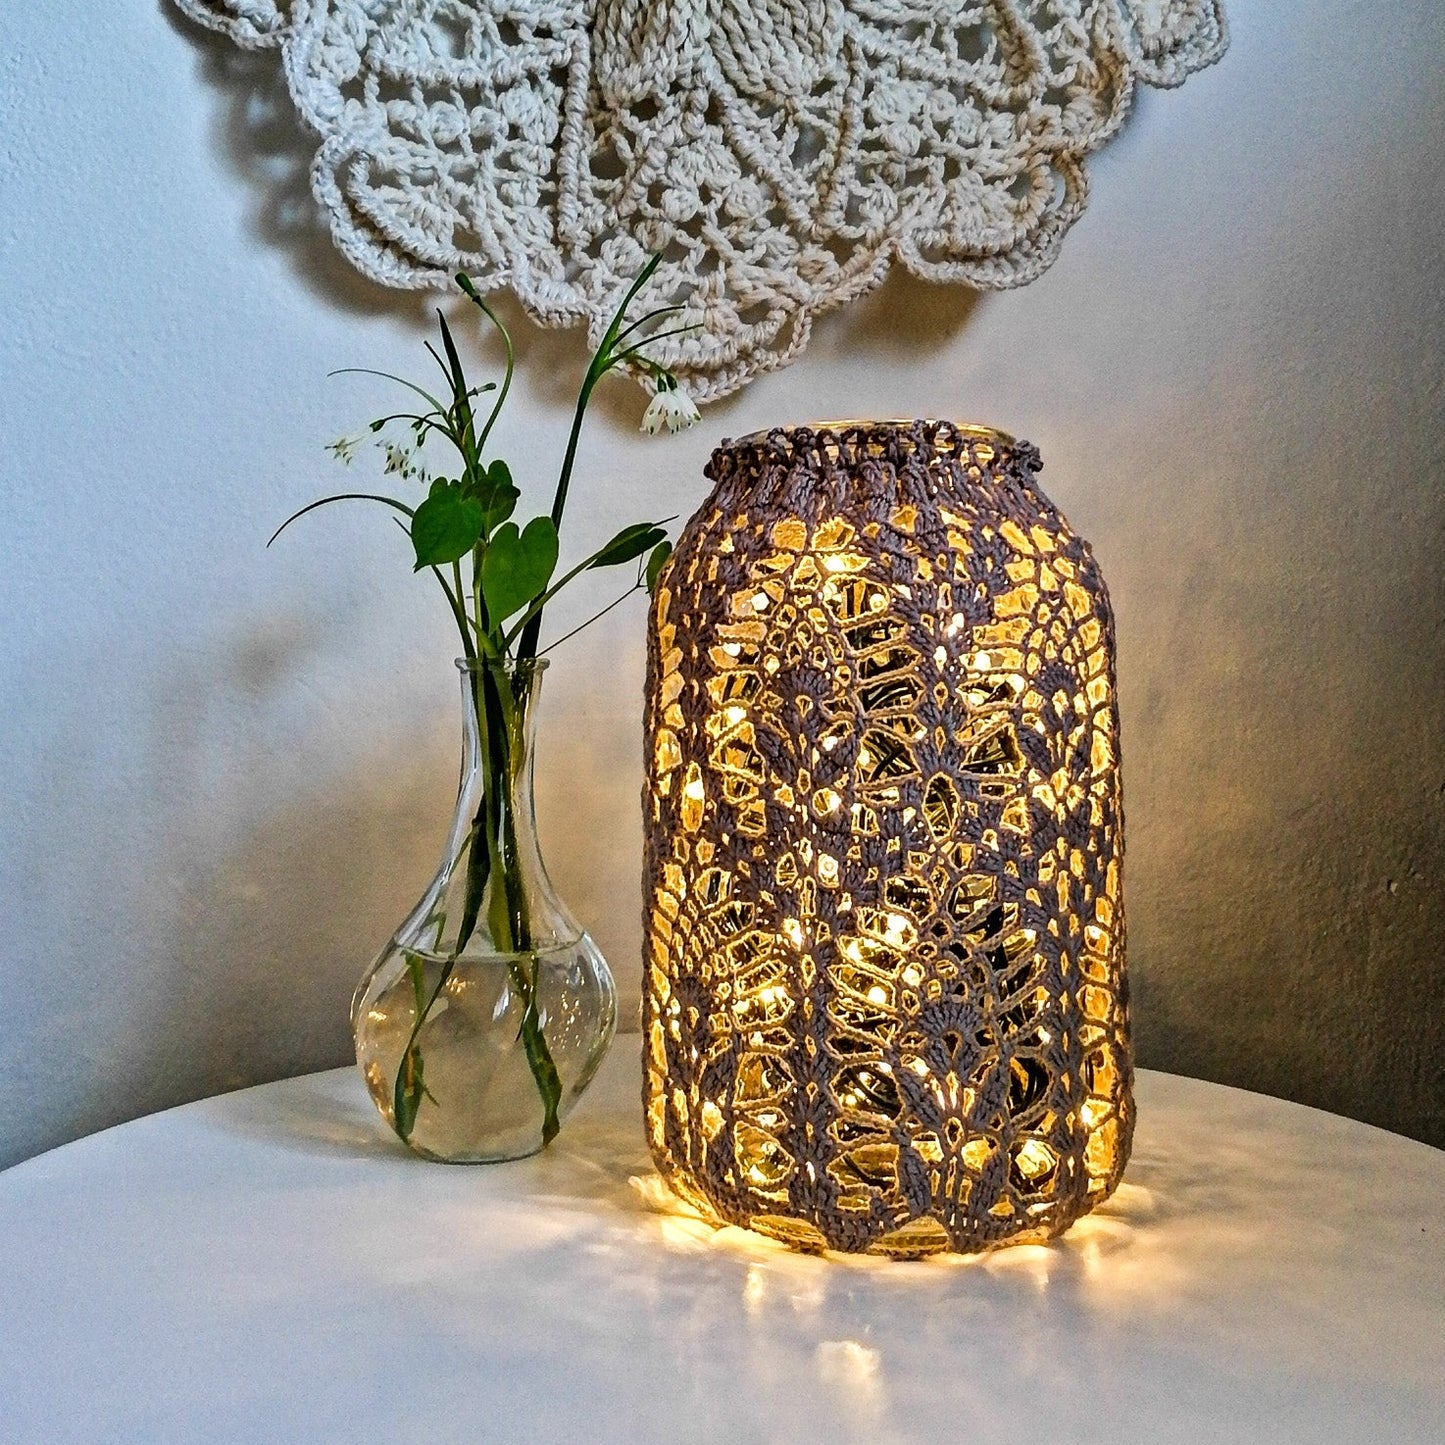 Giant lacy lantern or vase